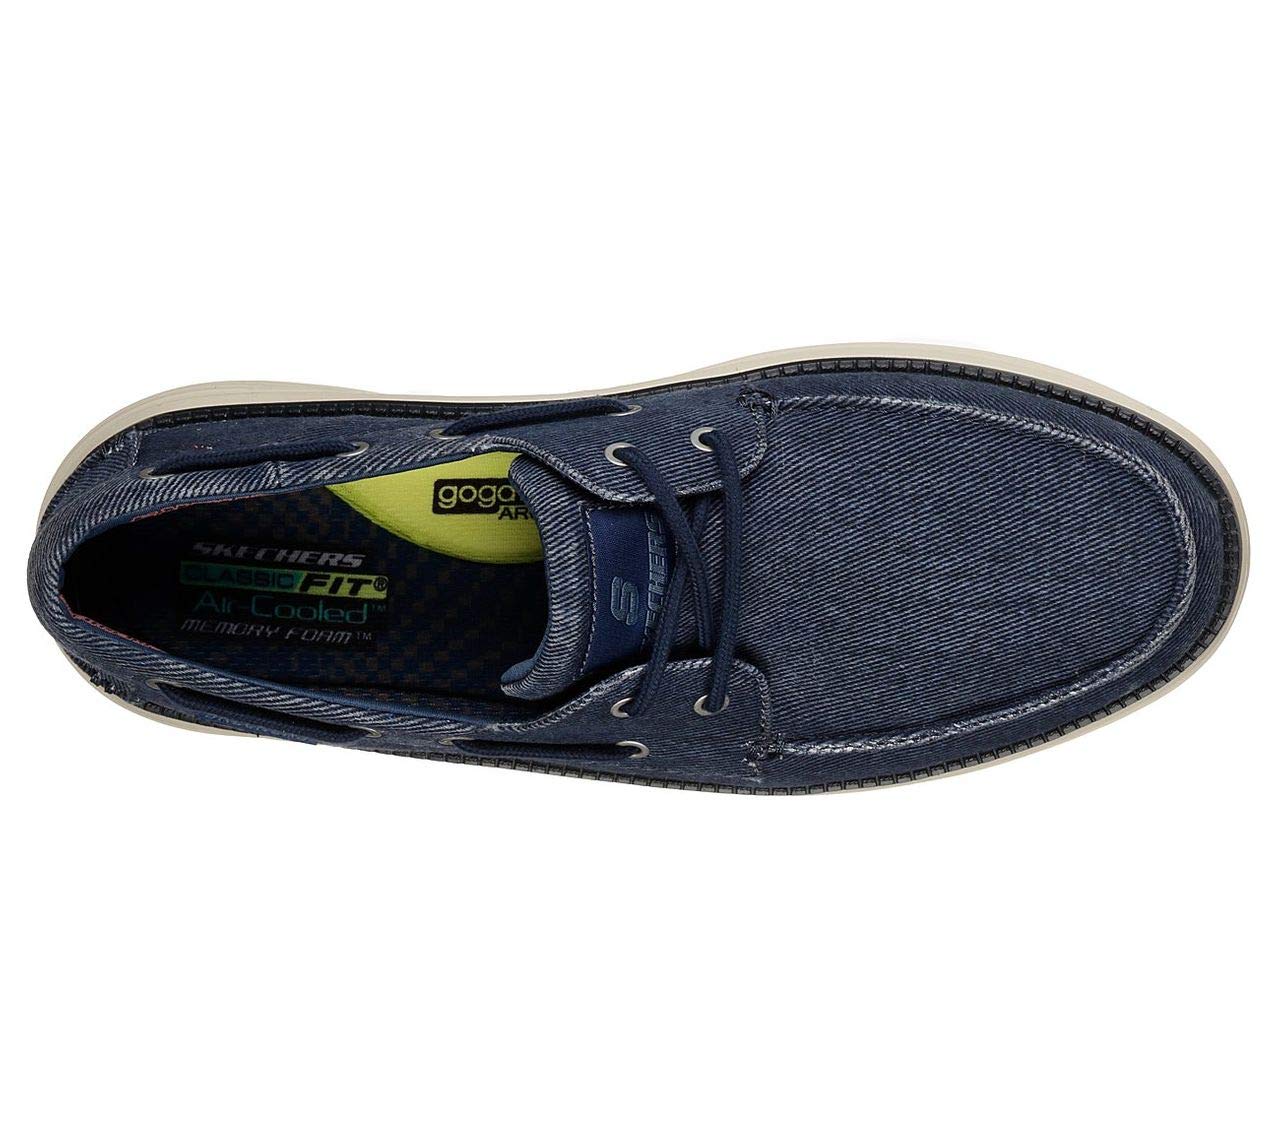 Skechers Men's Status 2.0-Lorano Boat Shoes